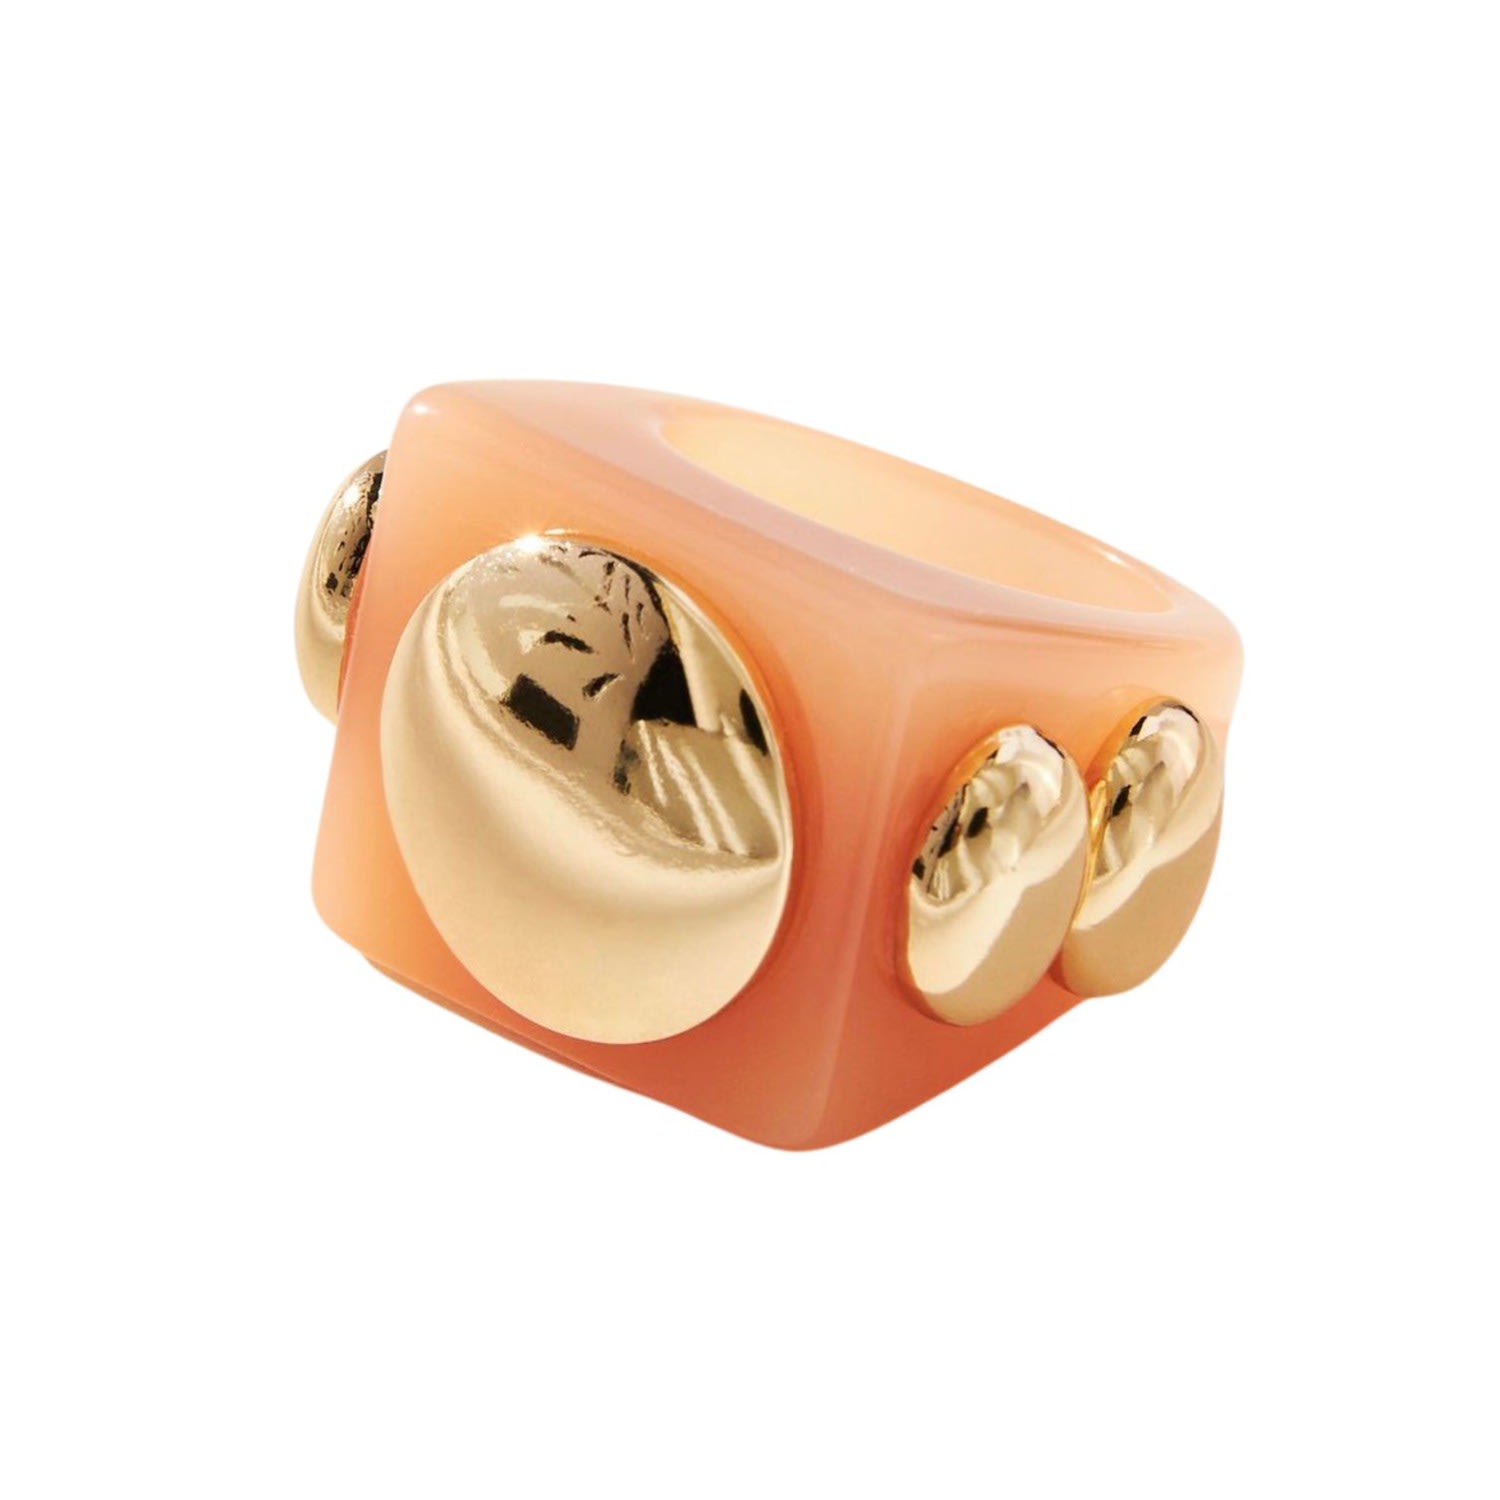 Smith & Co. Jewel Design Women's Neutrals Classic Queen Ring - Tan In Orange